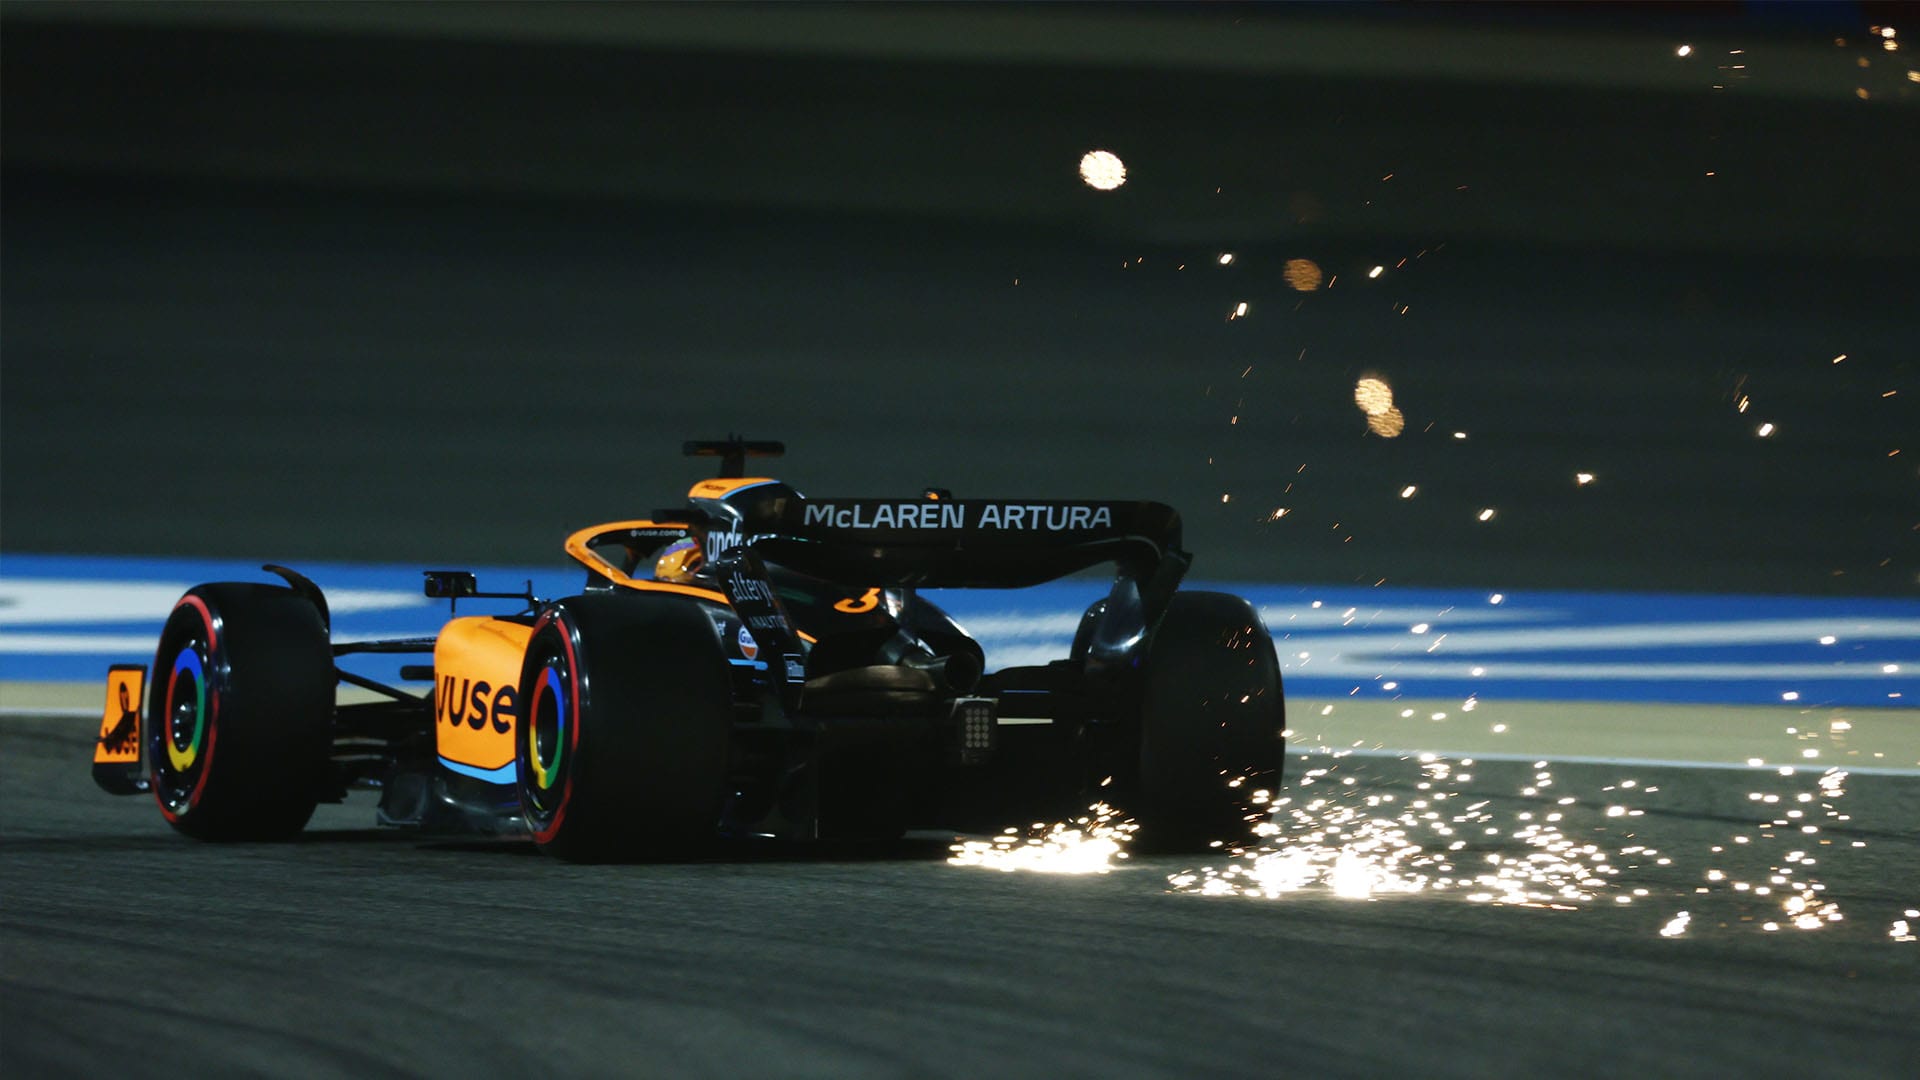 LIVE COVERAGE - Qualifying in Bahrain | Formula 1®